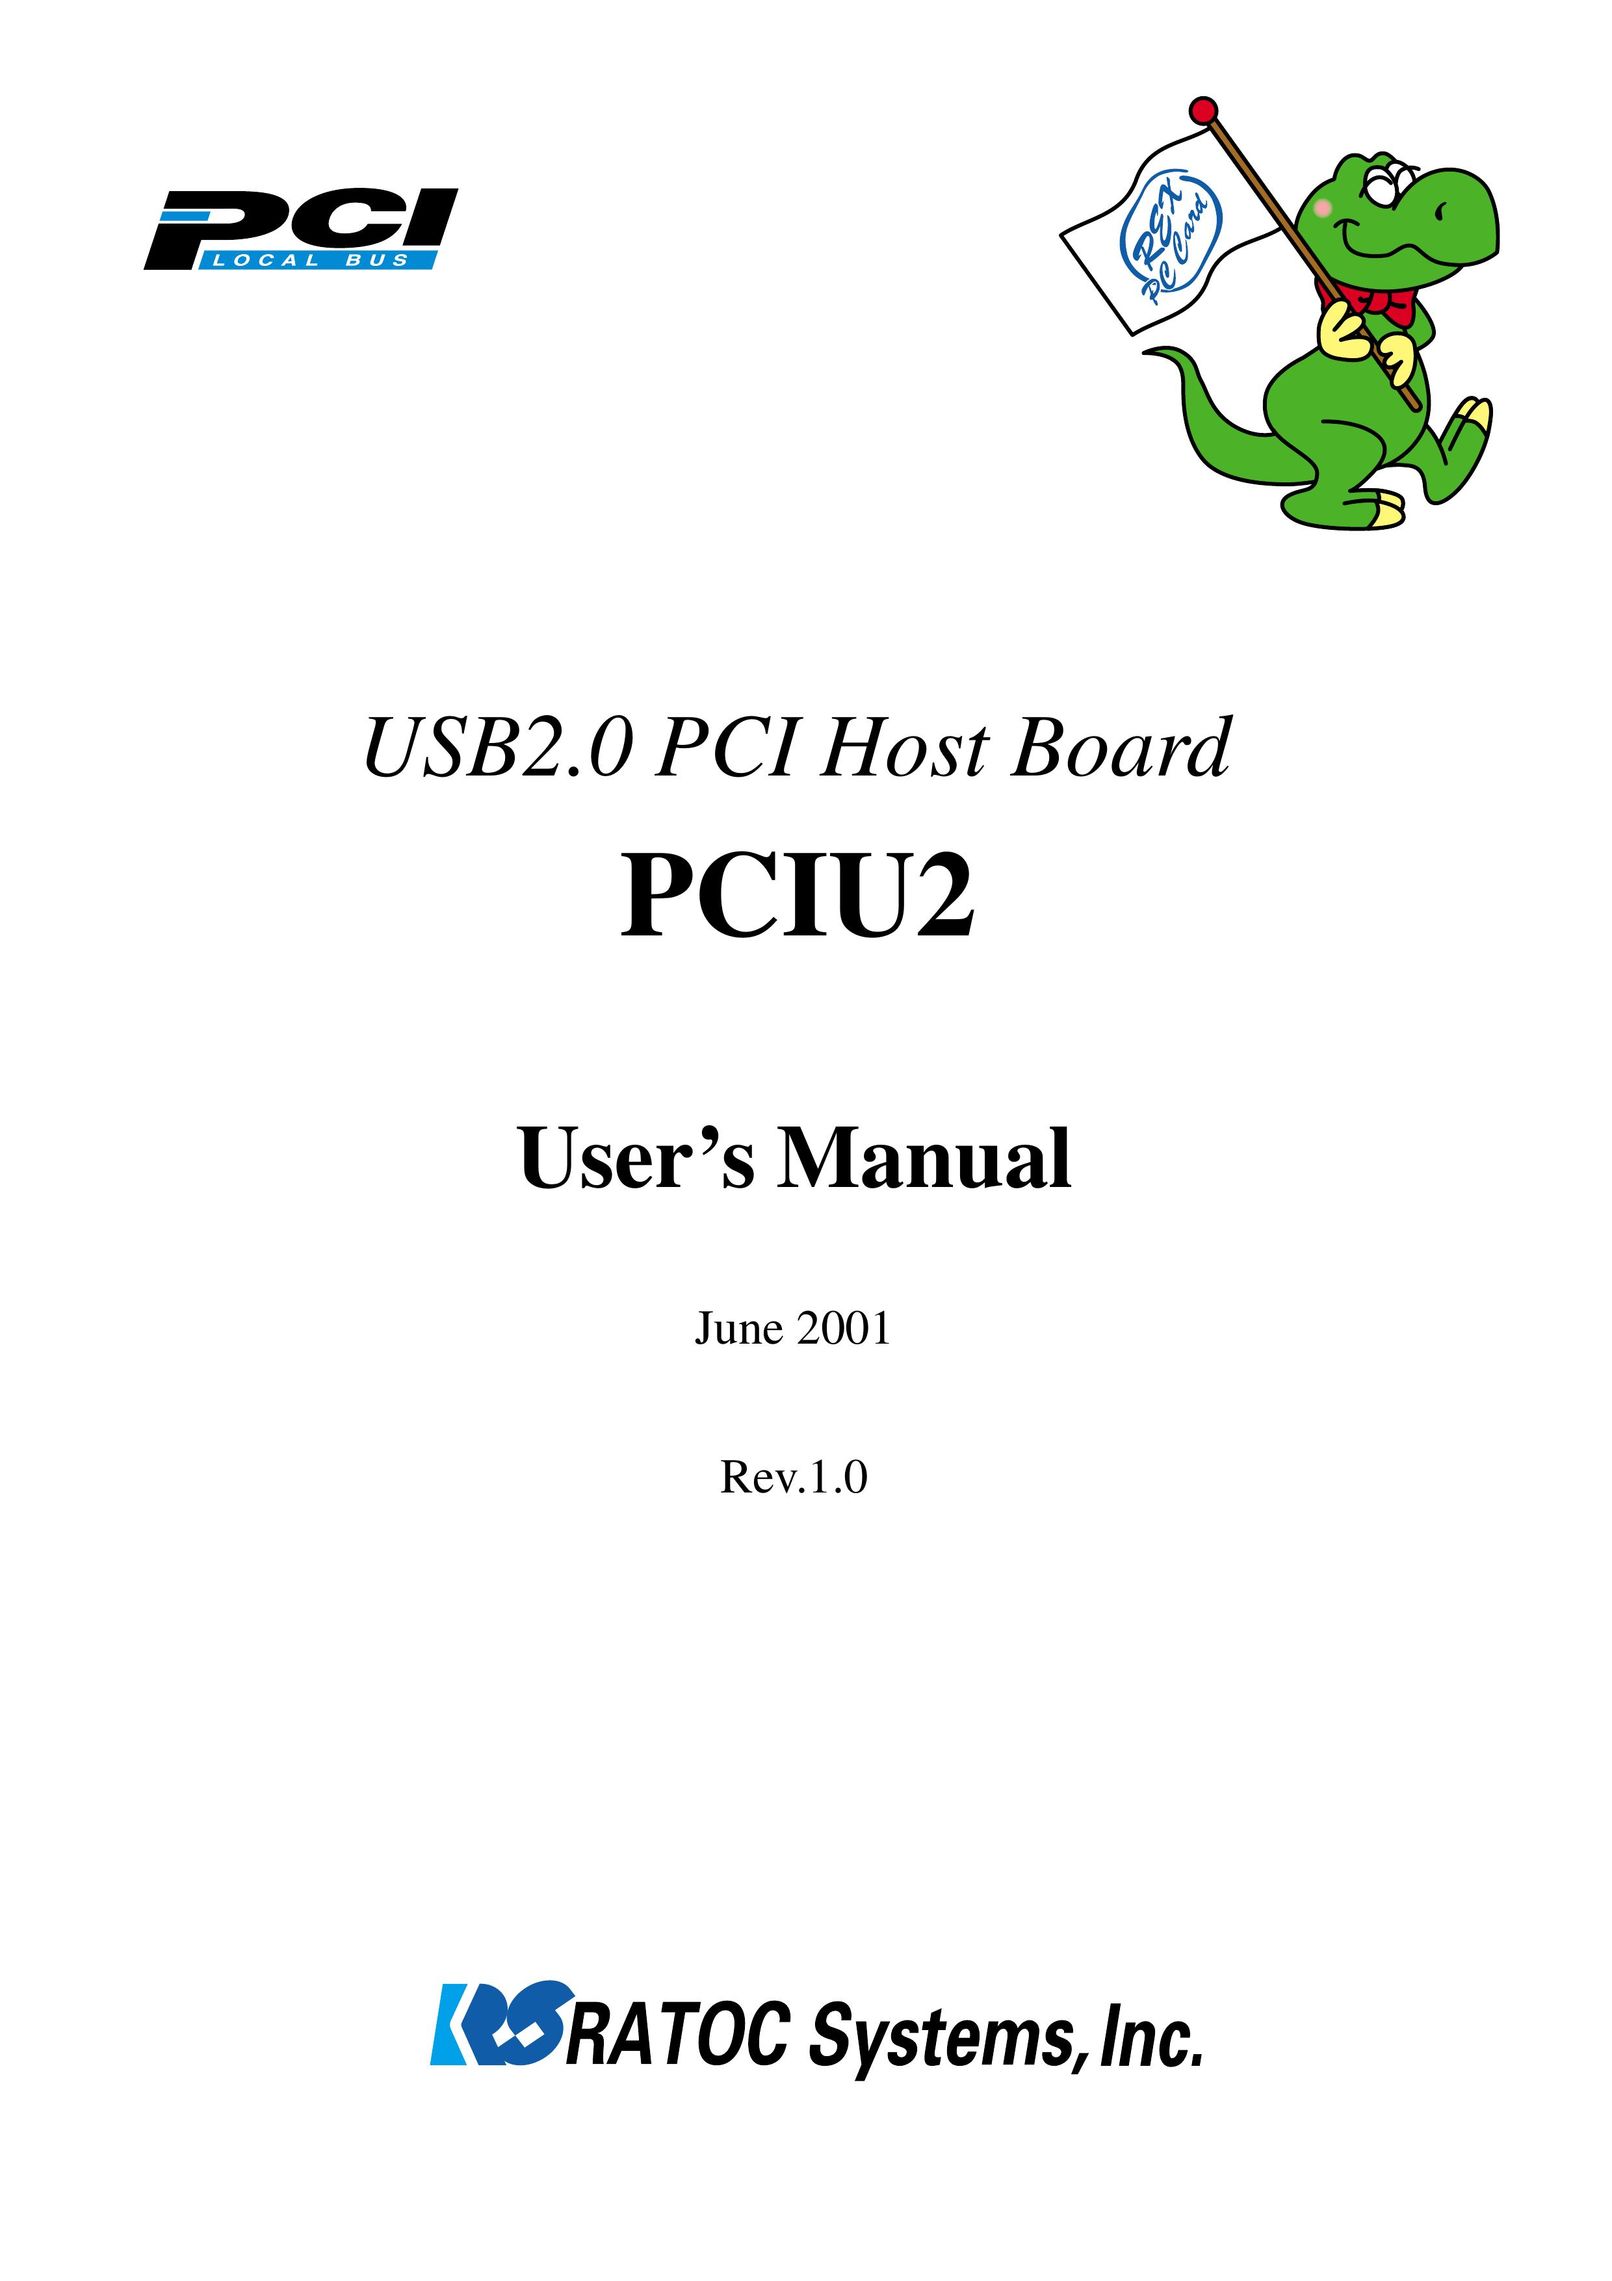 Ratoc Systems PCIU2 Network Card User Manual